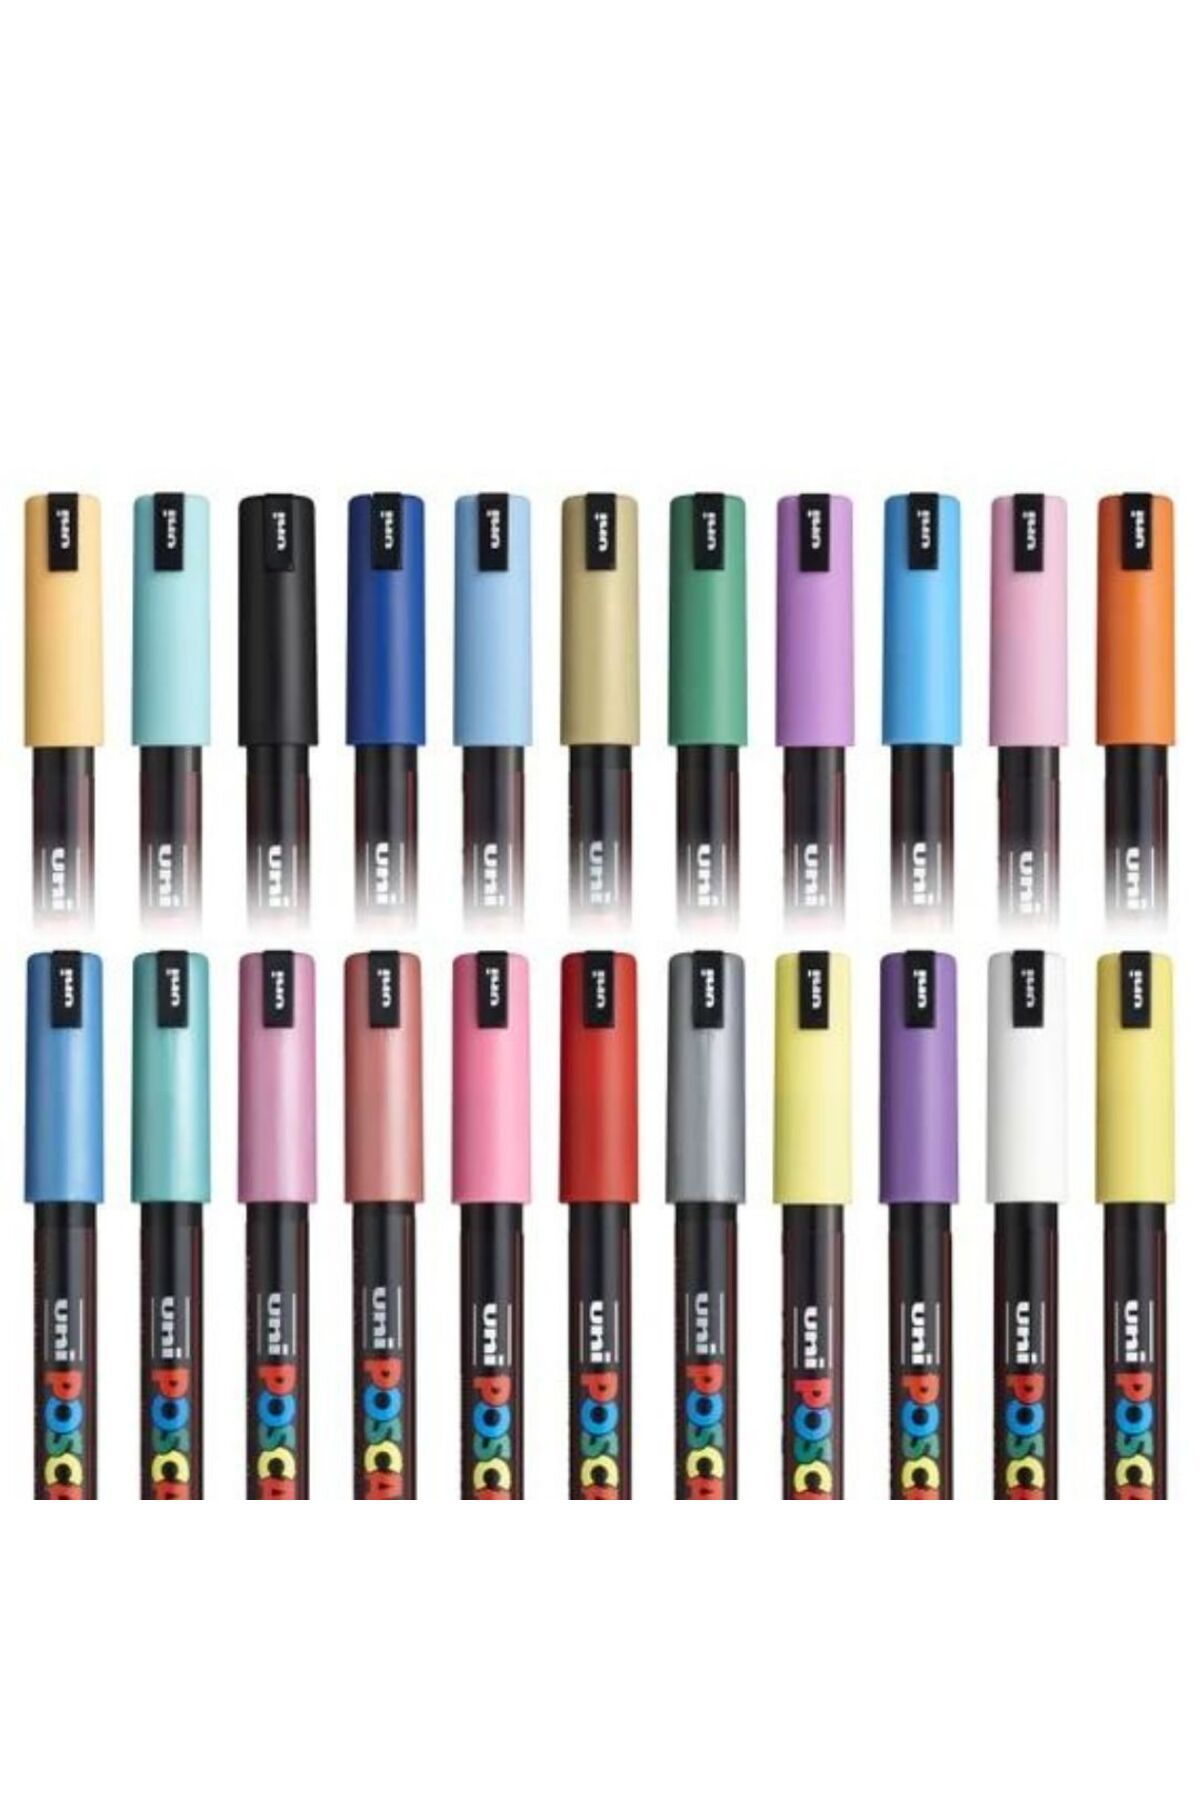 Uni Posca Marker Kalem Pc-1mr (0.7mm) İğne Uçlu 21'li Tüm Renkler Full Set